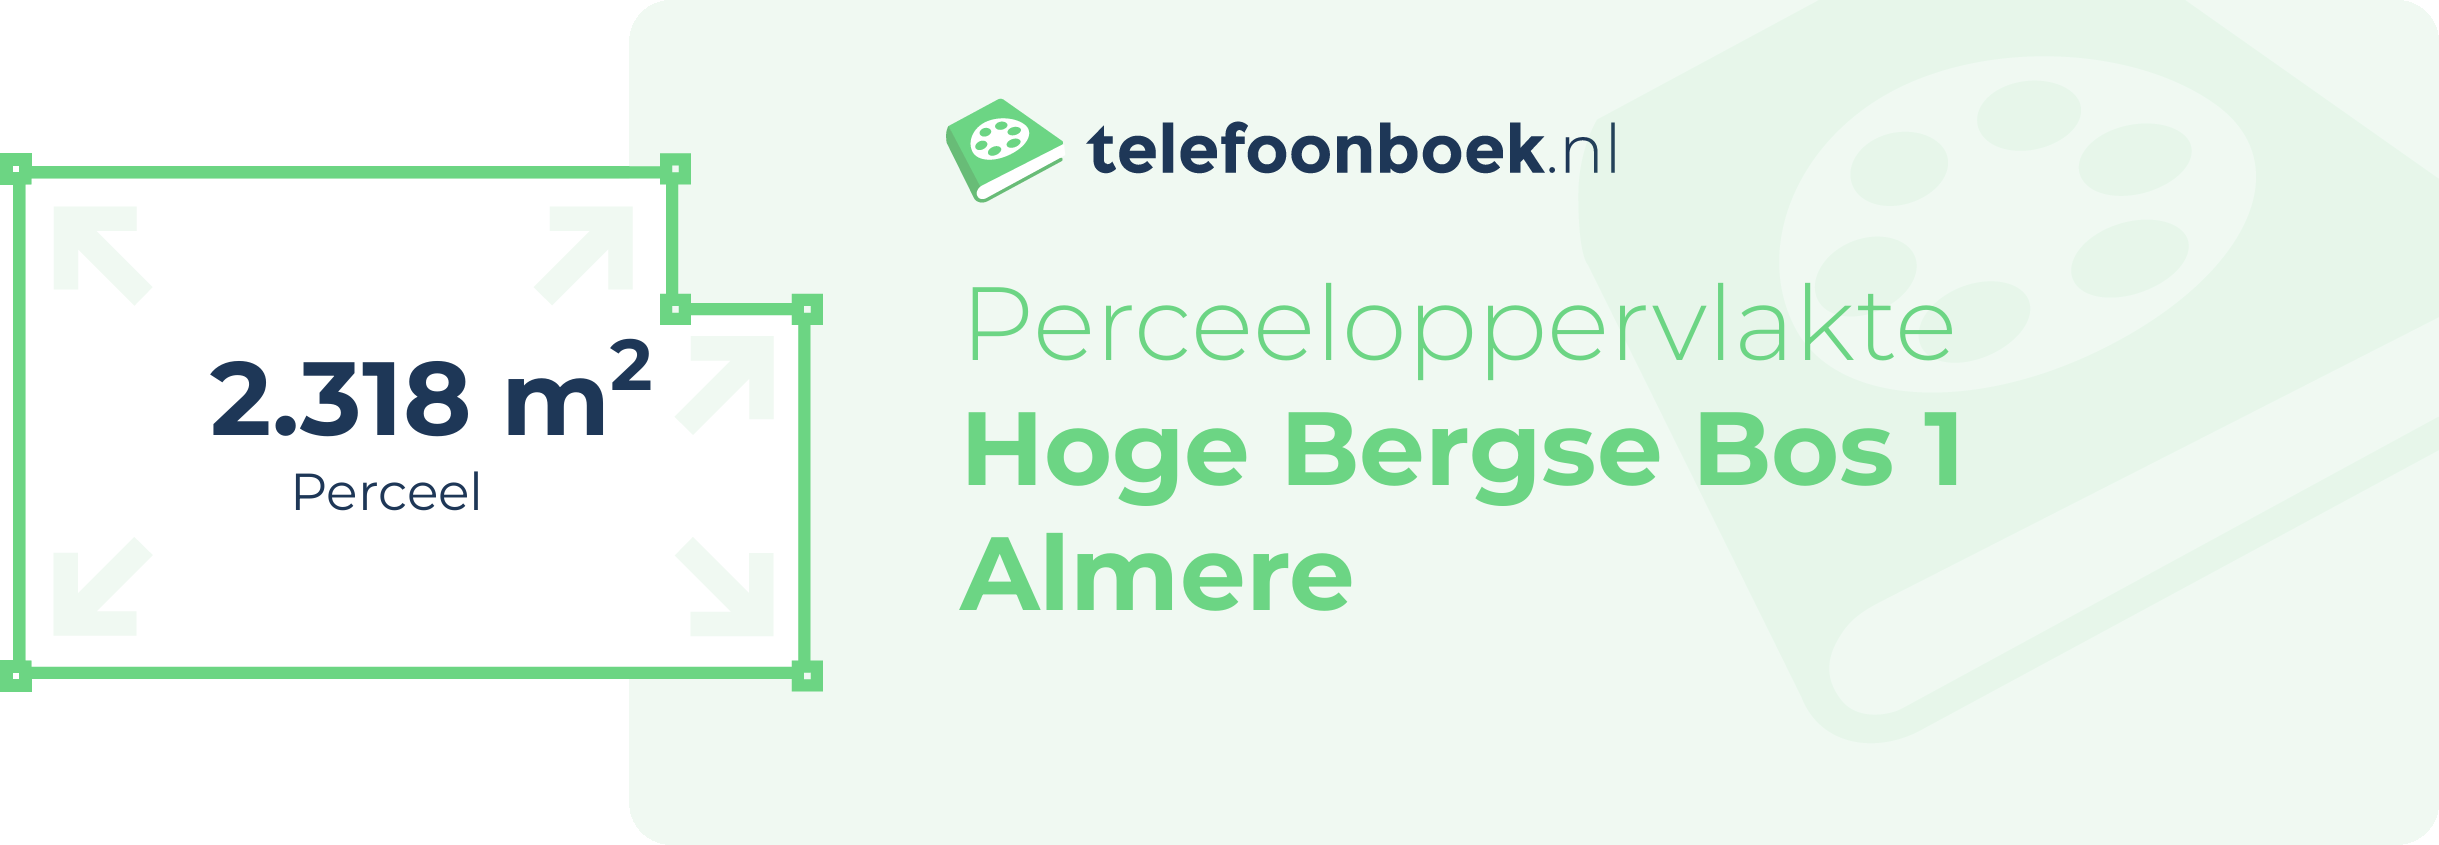 Perceeloppervlakte Hoge Bergse Bos 1 Almere